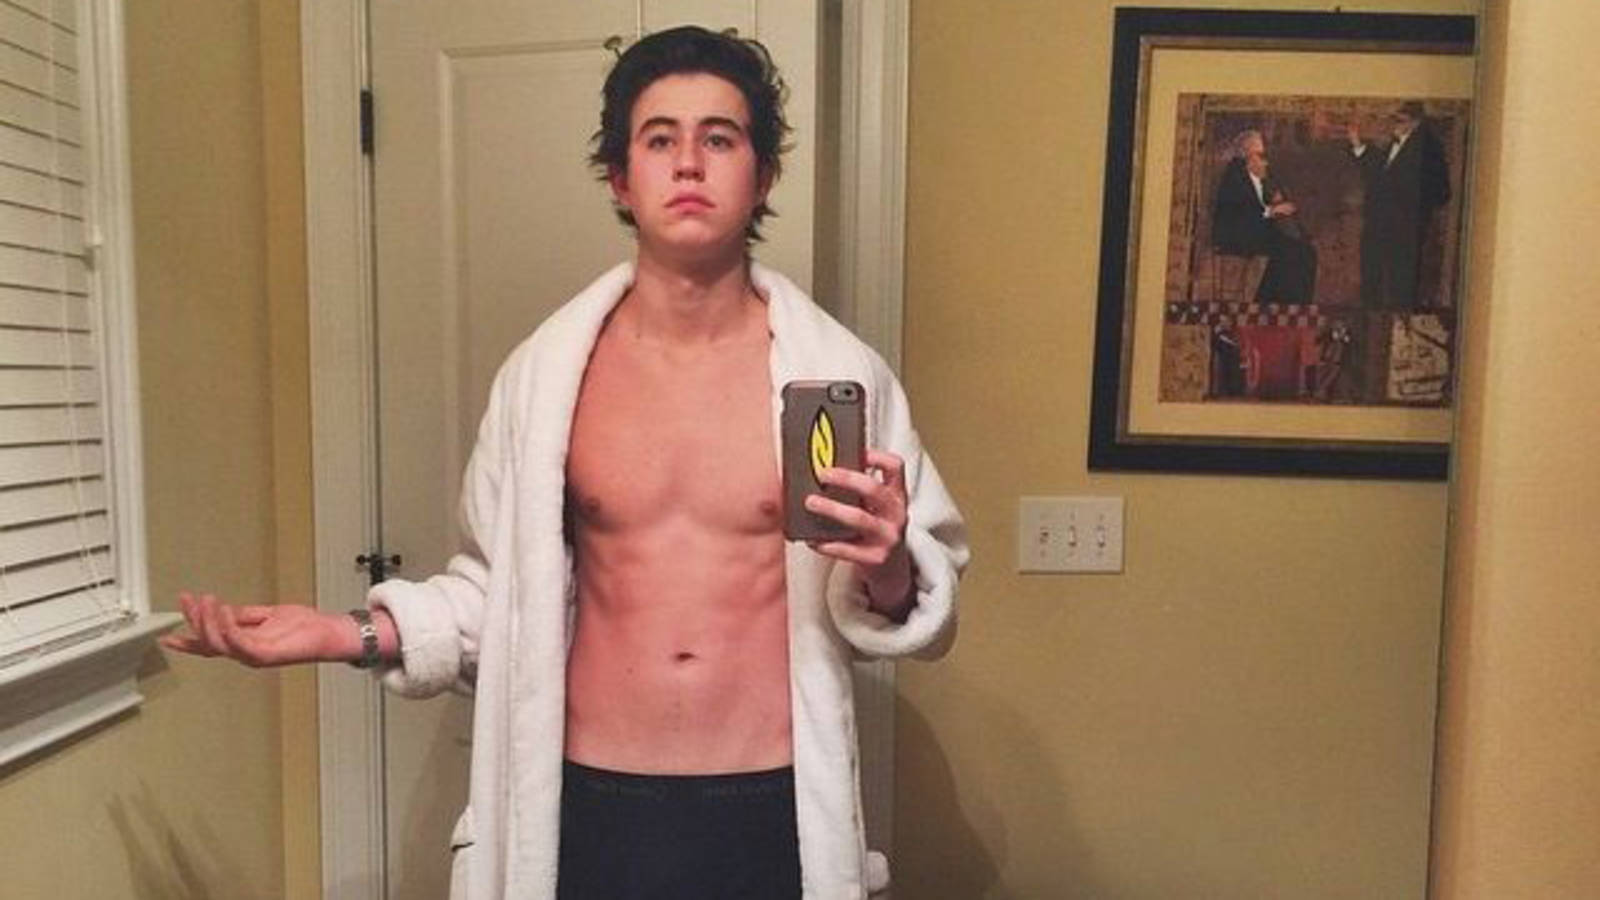 Snapchats sending shirtless Racy selfies